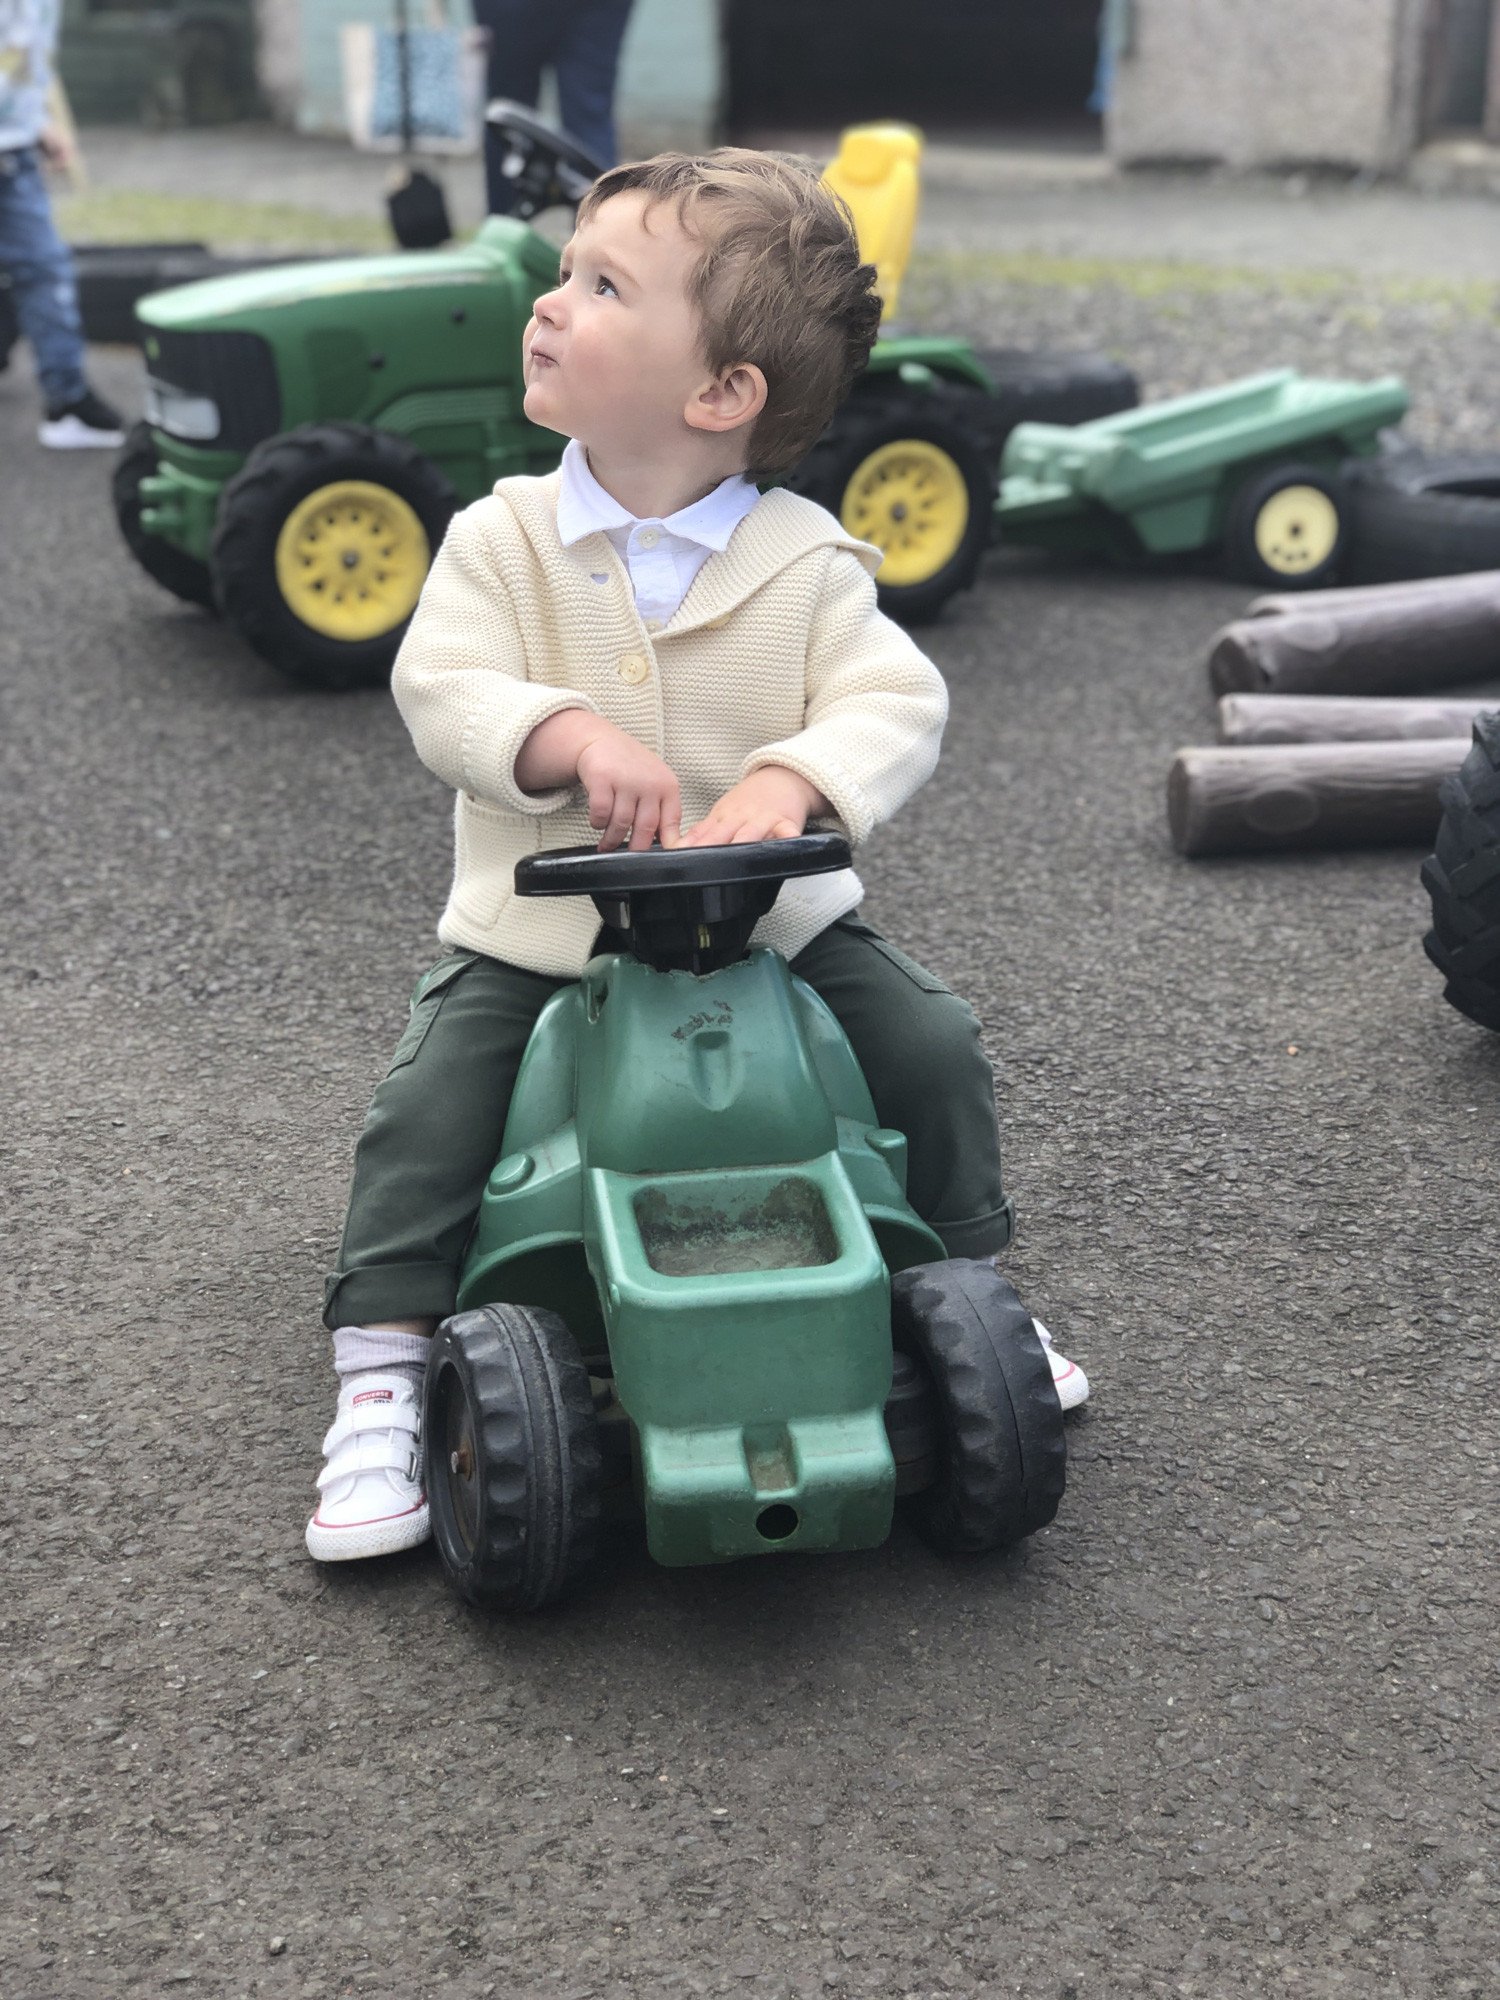 Max has a tractor ride